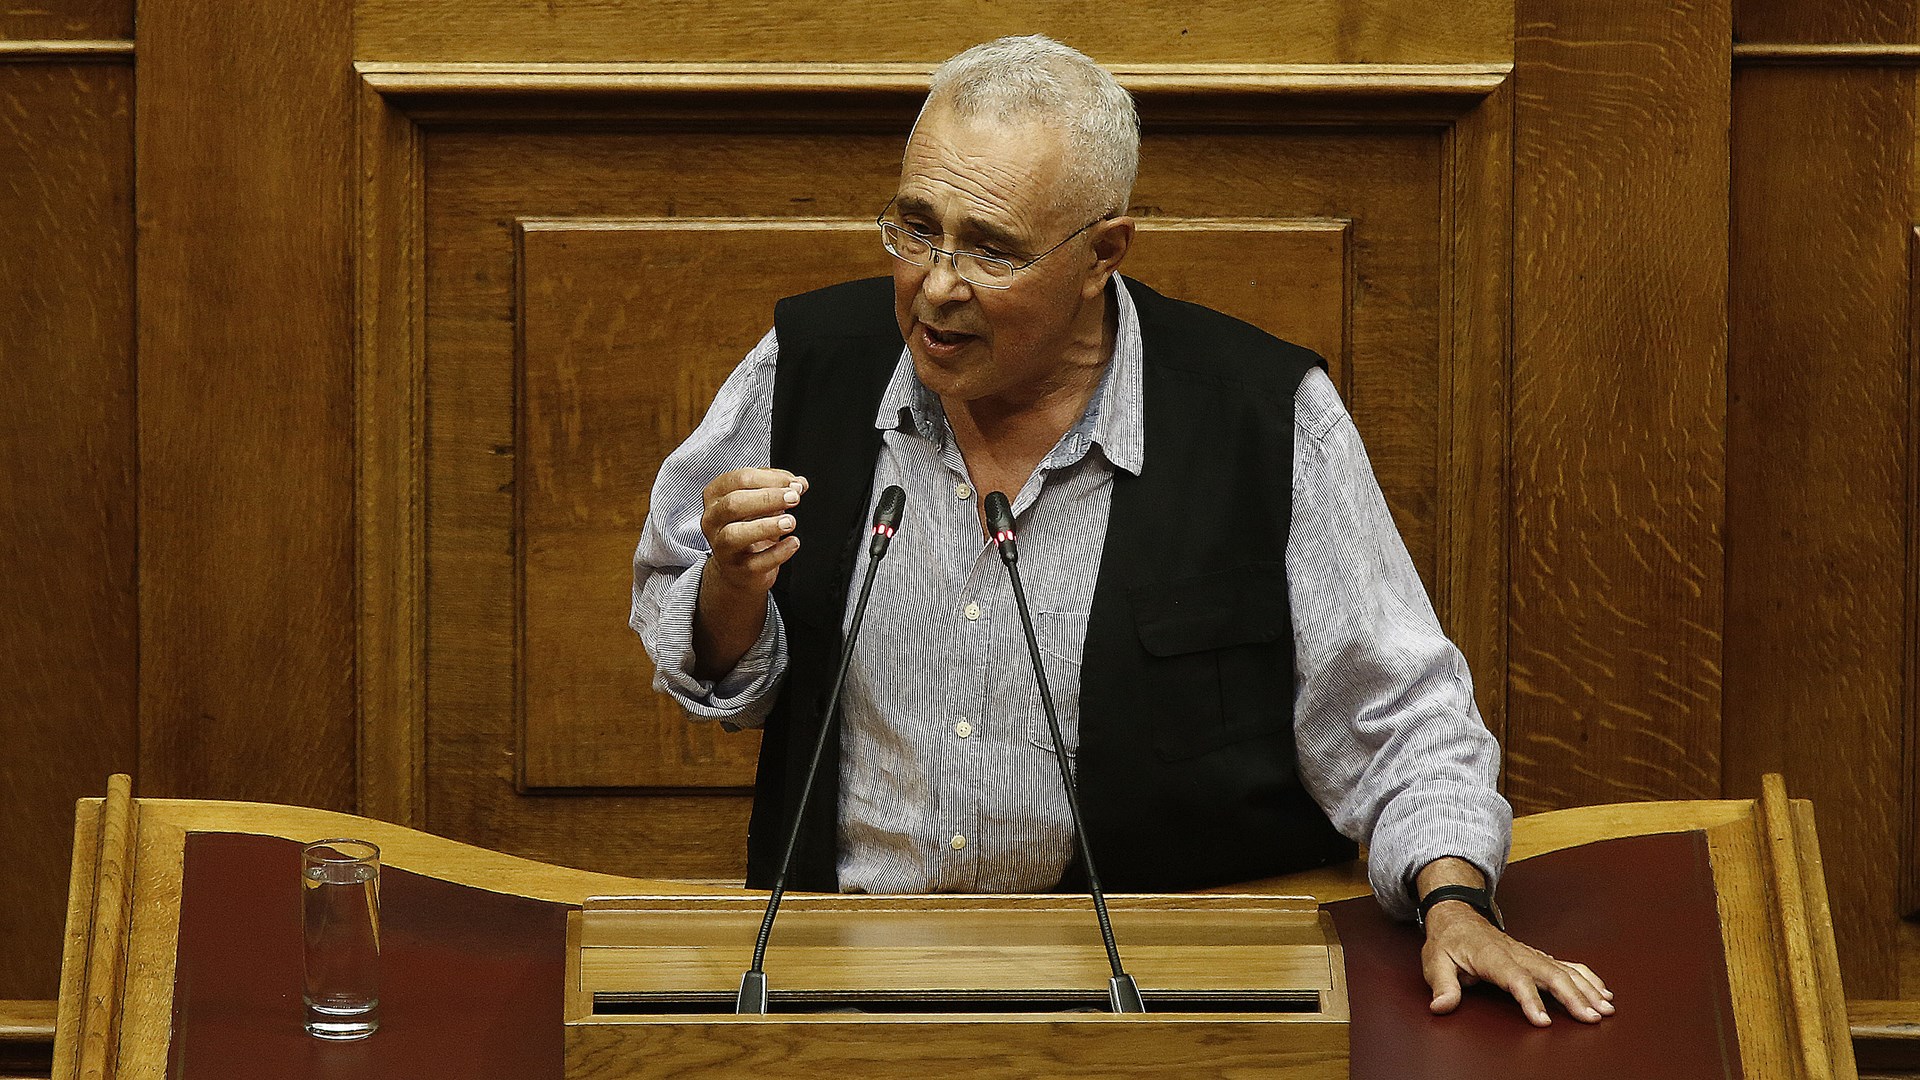 K. Ζουράρις: Όταν ο Τσίπρας είπε “Βόρεια Μακεδονία”, ένιωσα τάση προς εμετό…